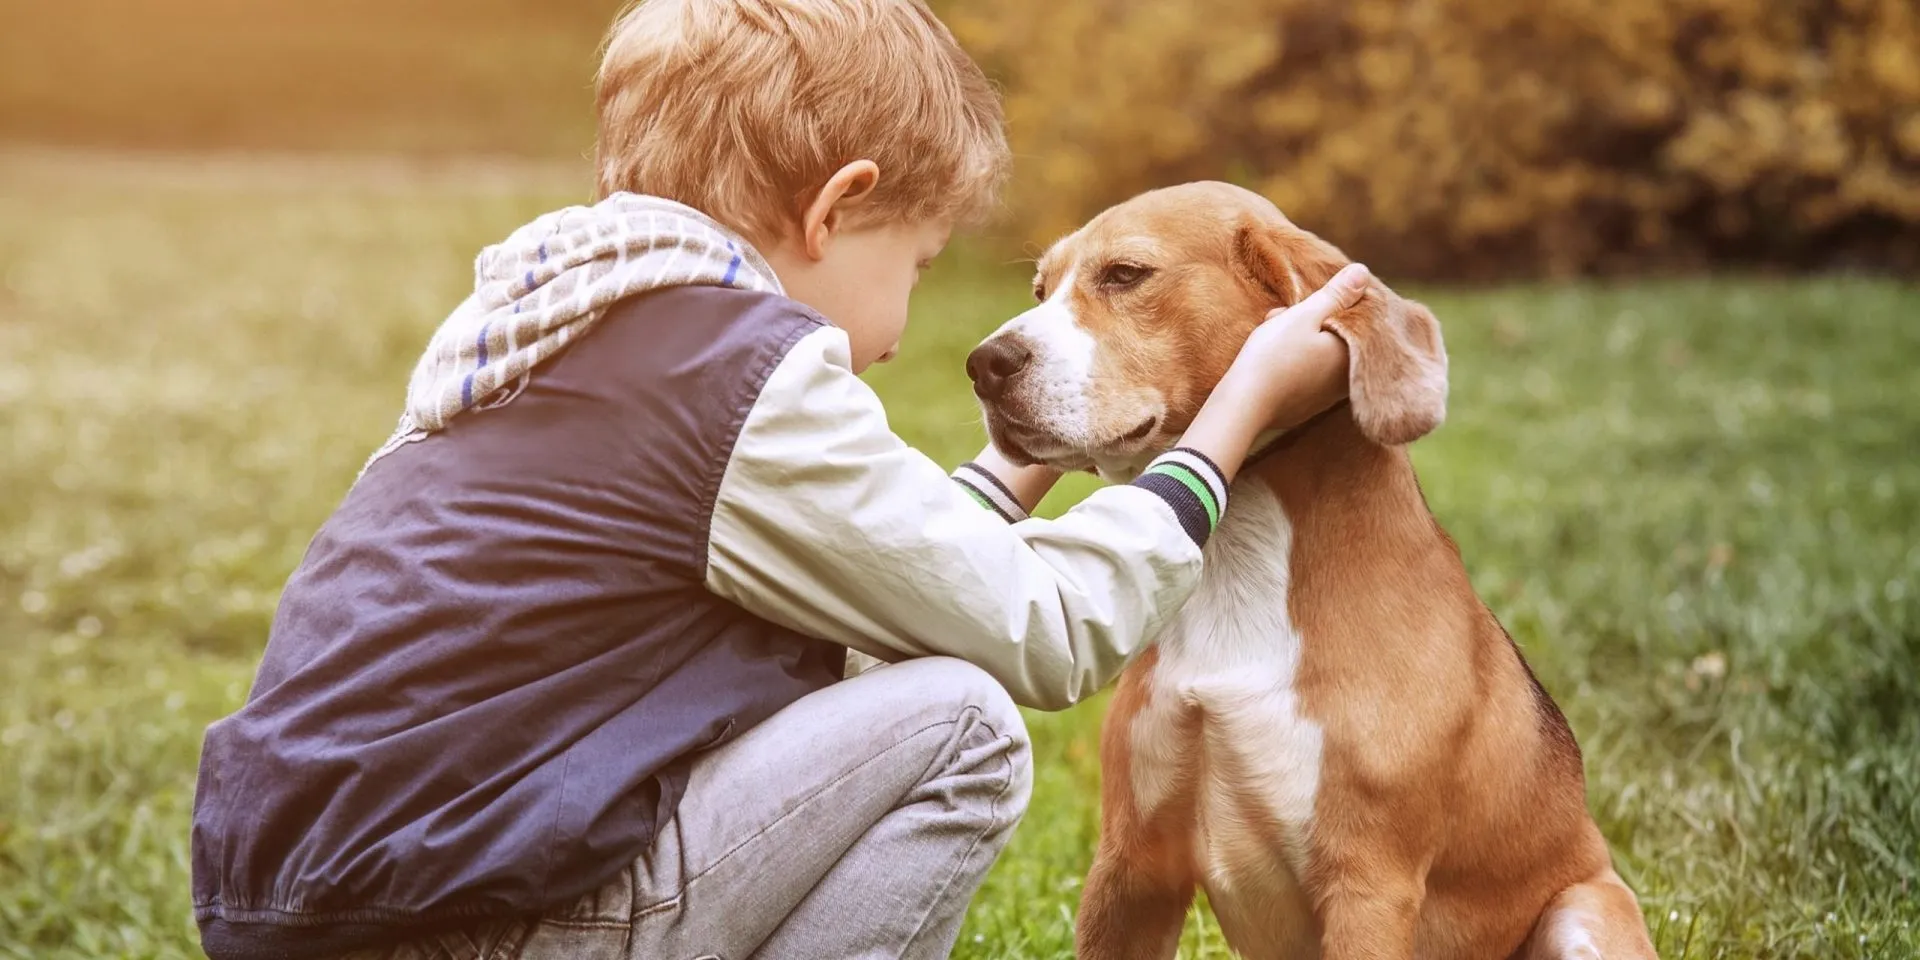 Собака и человек стали друзьями. Собака друг человека. Собака - лучший друг. Человек с собакой. Собаки лучшие друзья человека.